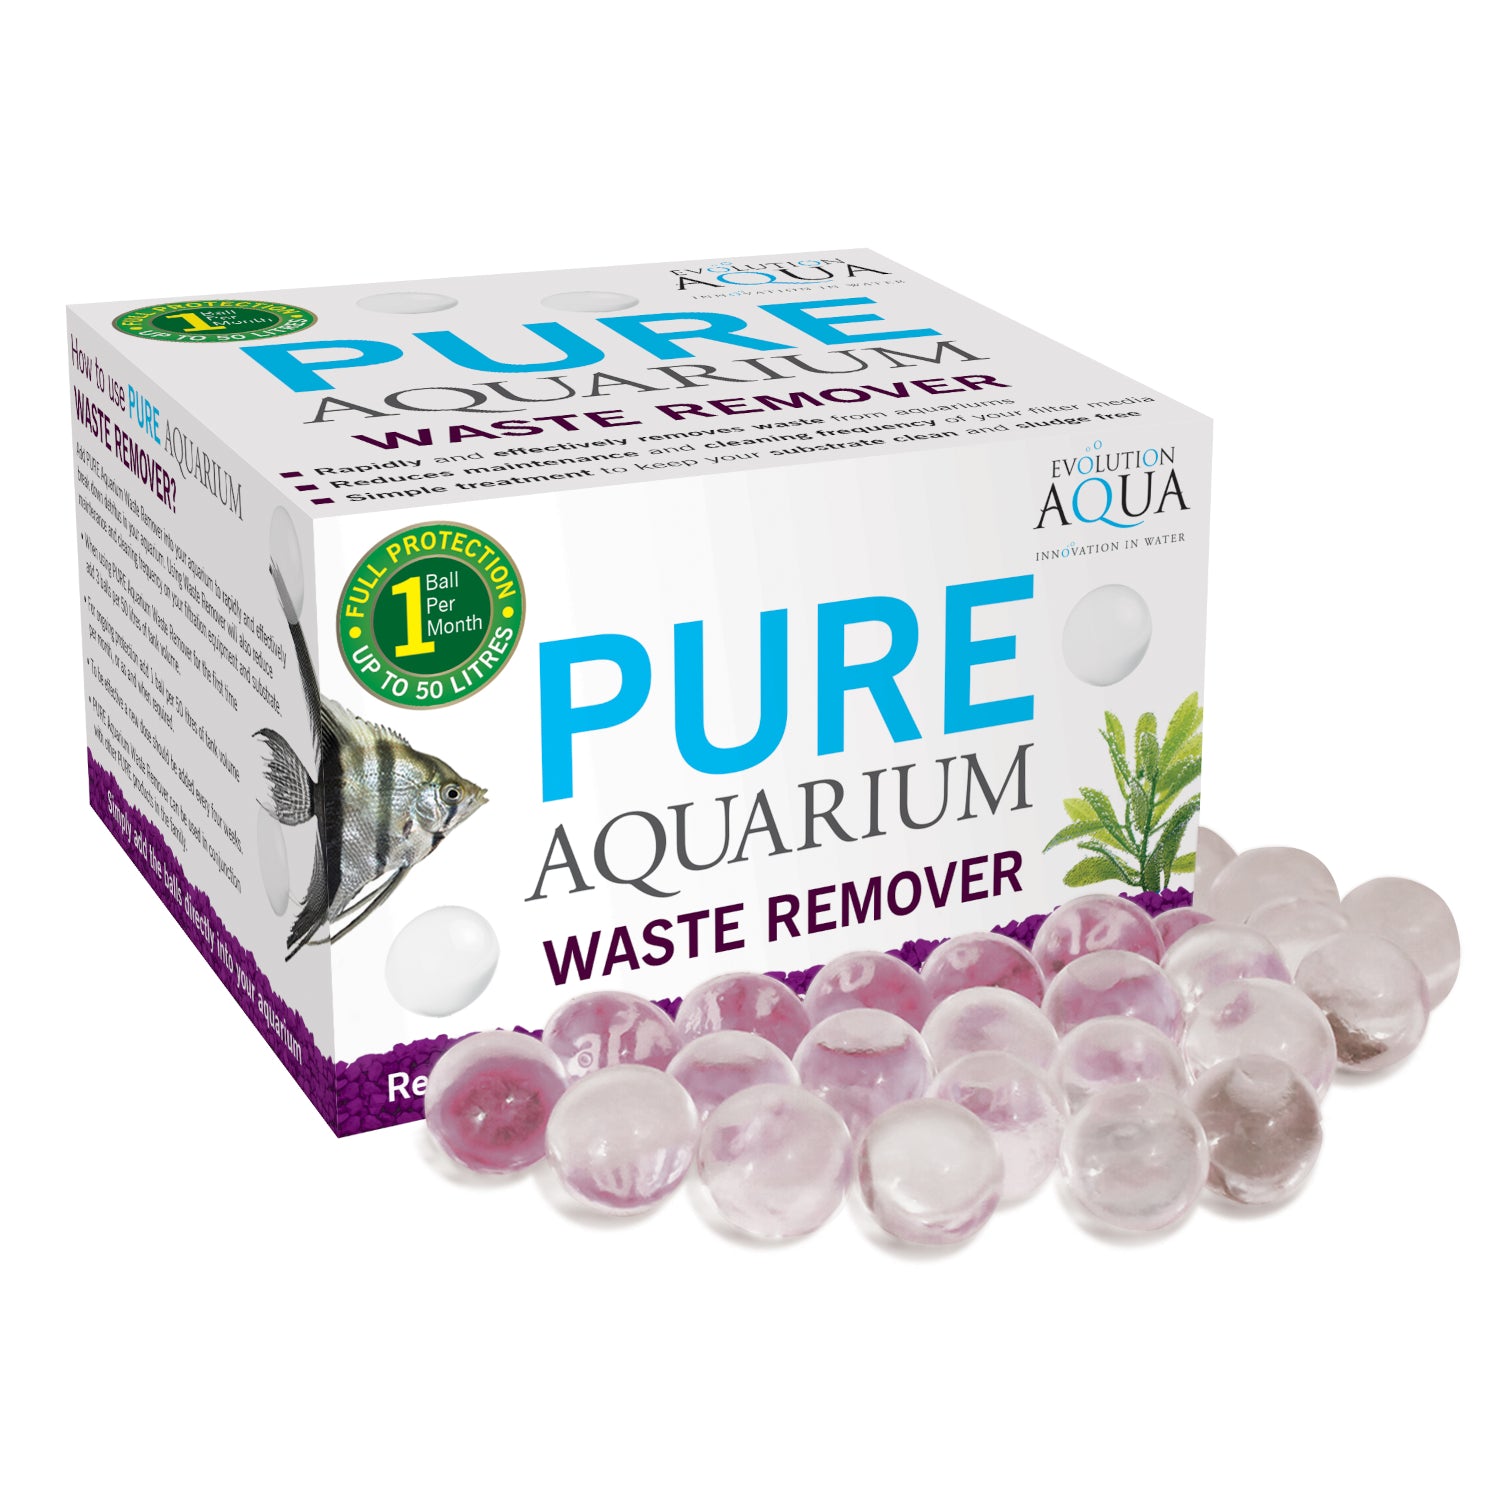 Evolution Aqua Pure Aquarium Waste Remover 15 Ball Tub